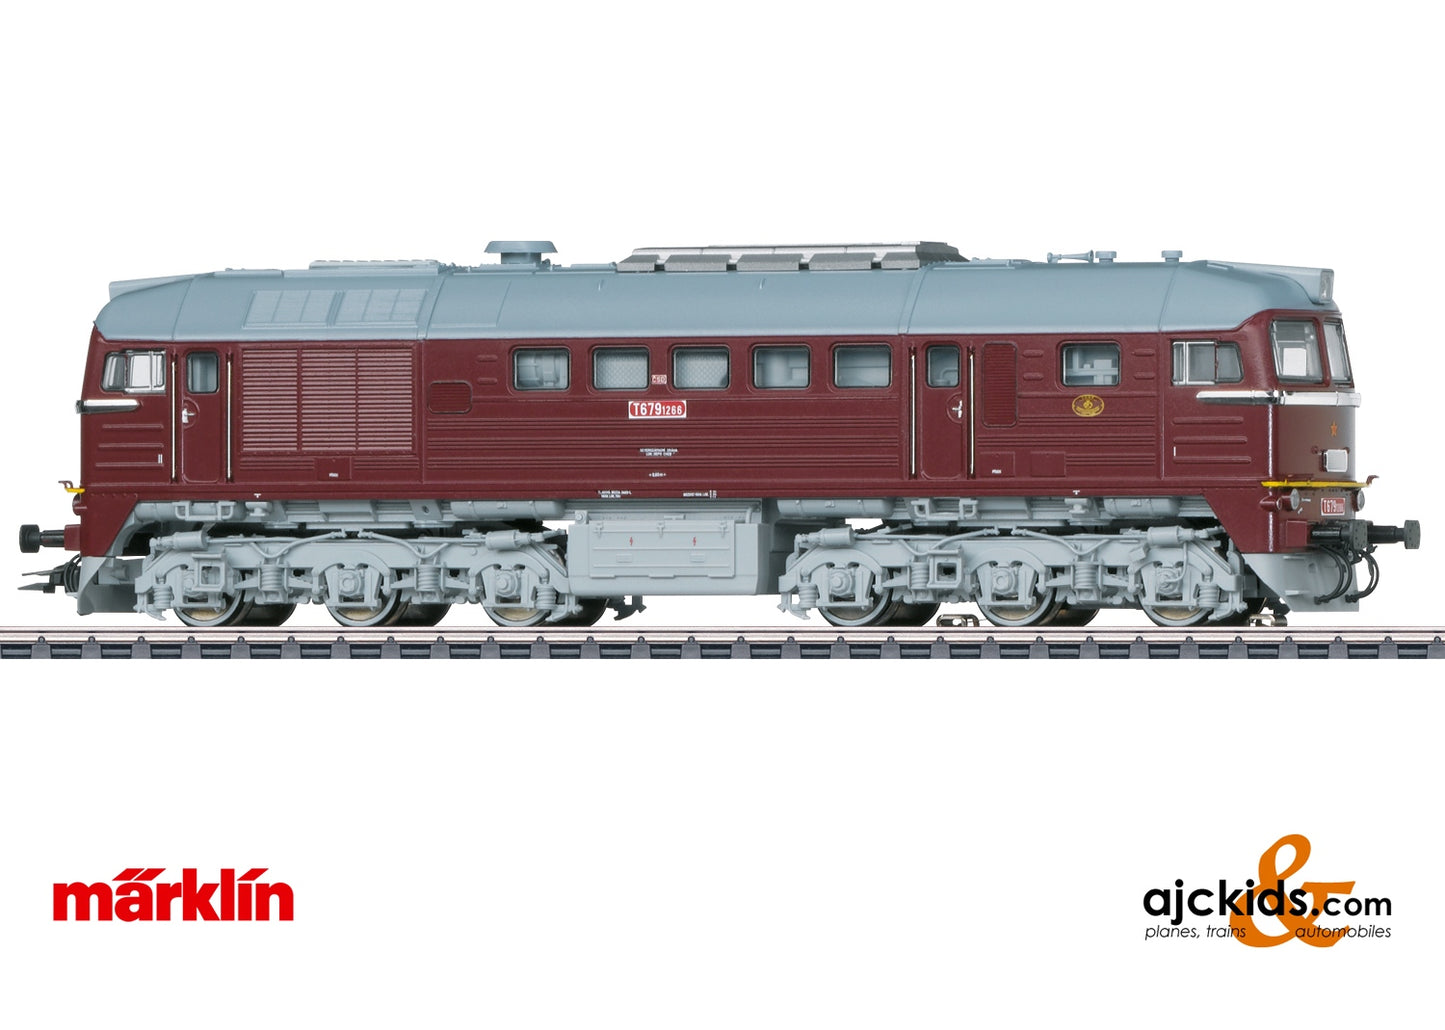 Marklin 39202 CSD Class T 679.1 Diesel at Ajckids.com